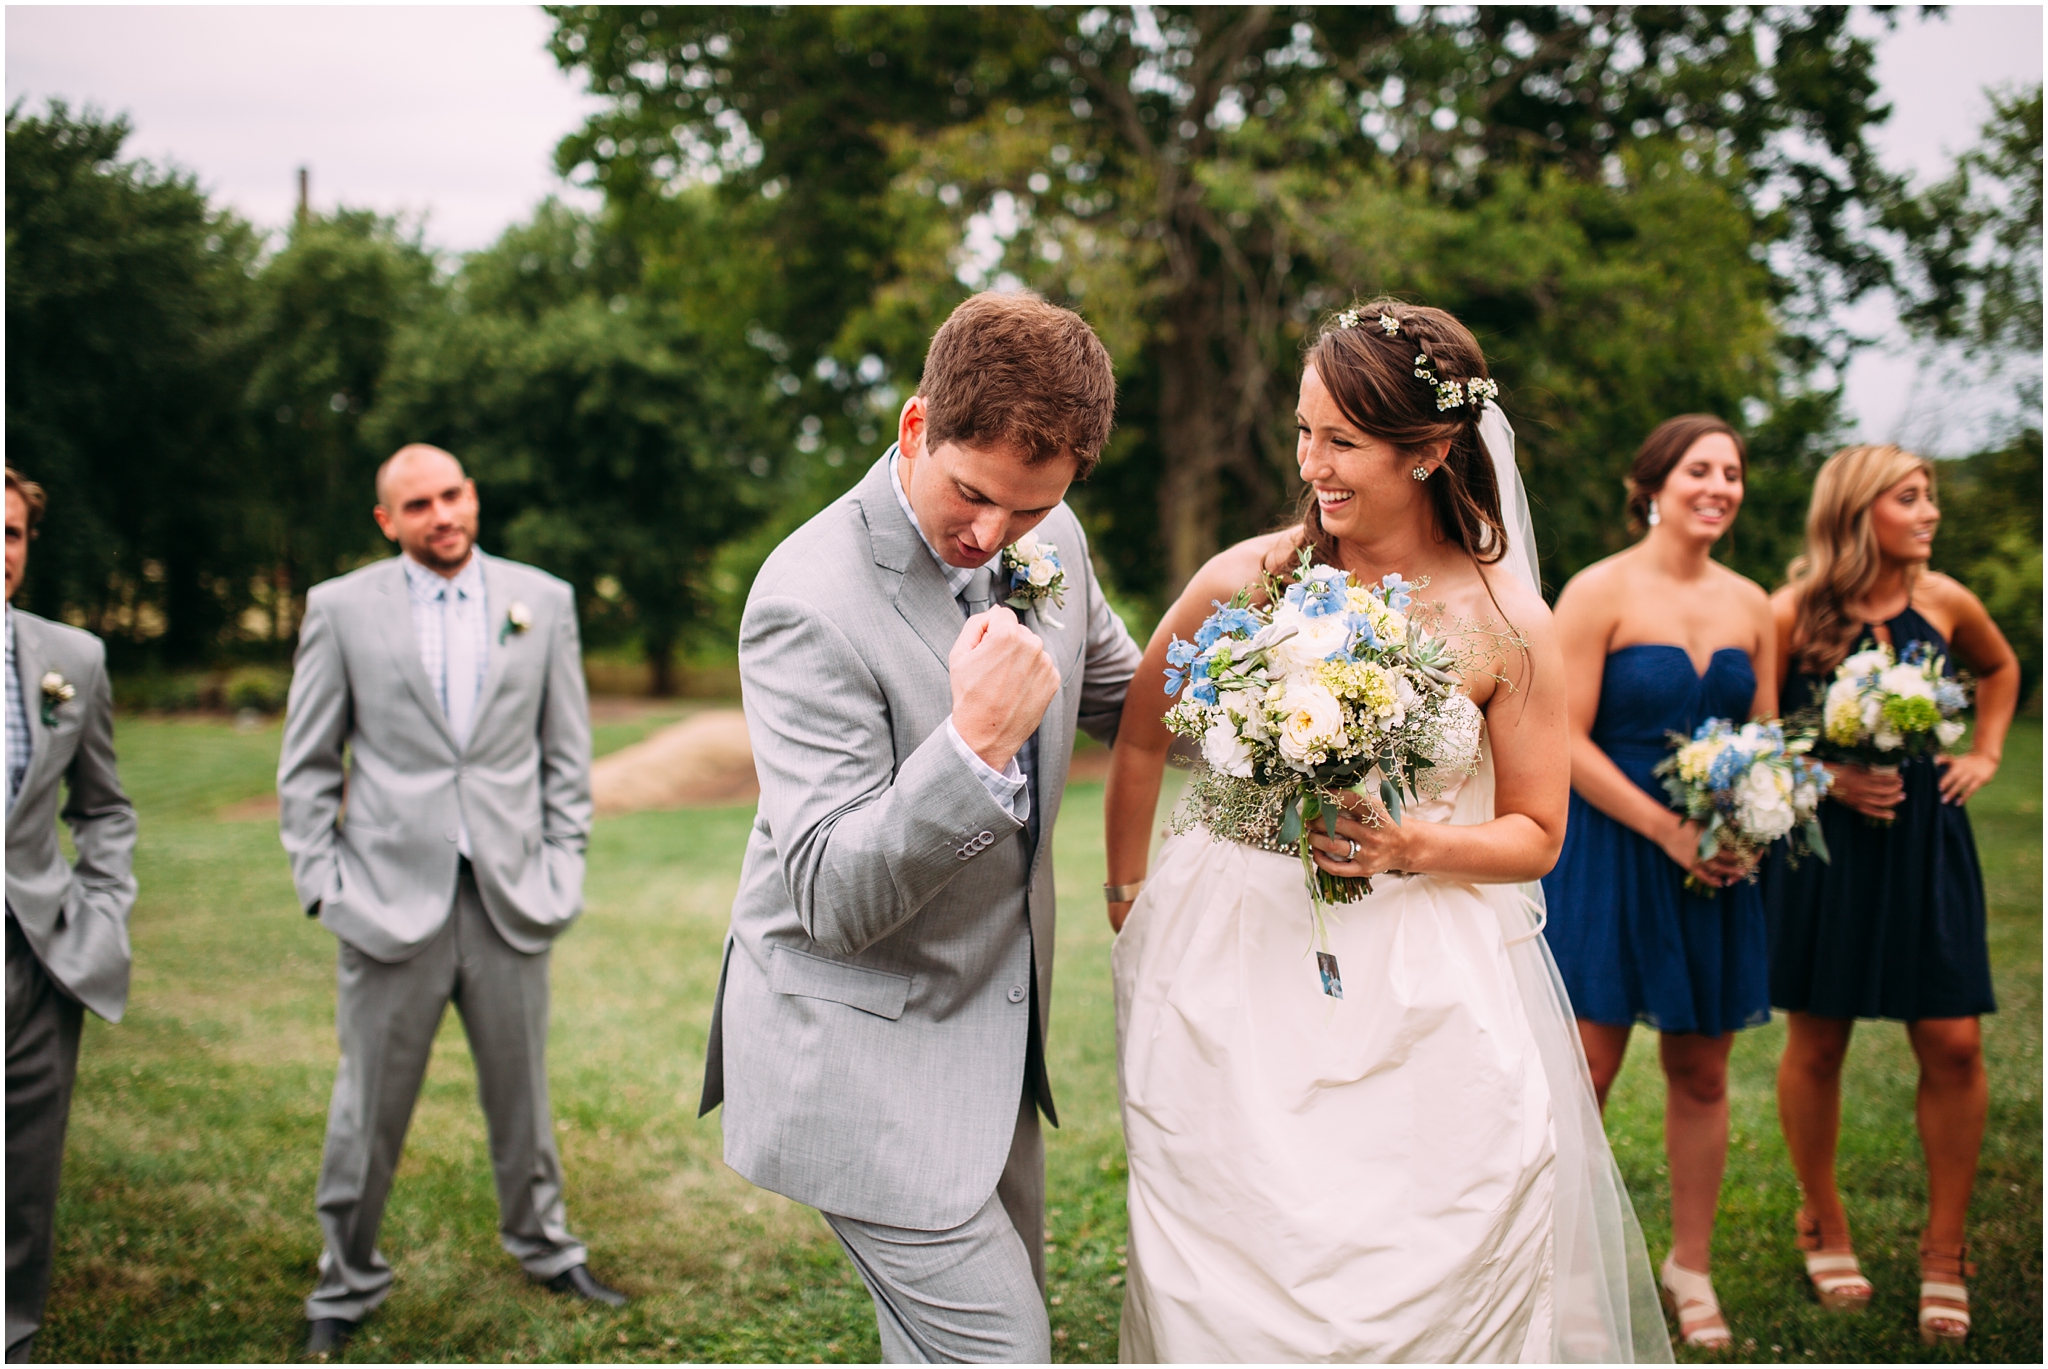 001-0719-173451-KatieandChris-Riverside on the Potomac Leesburg VA Wedding Photographer.jpg